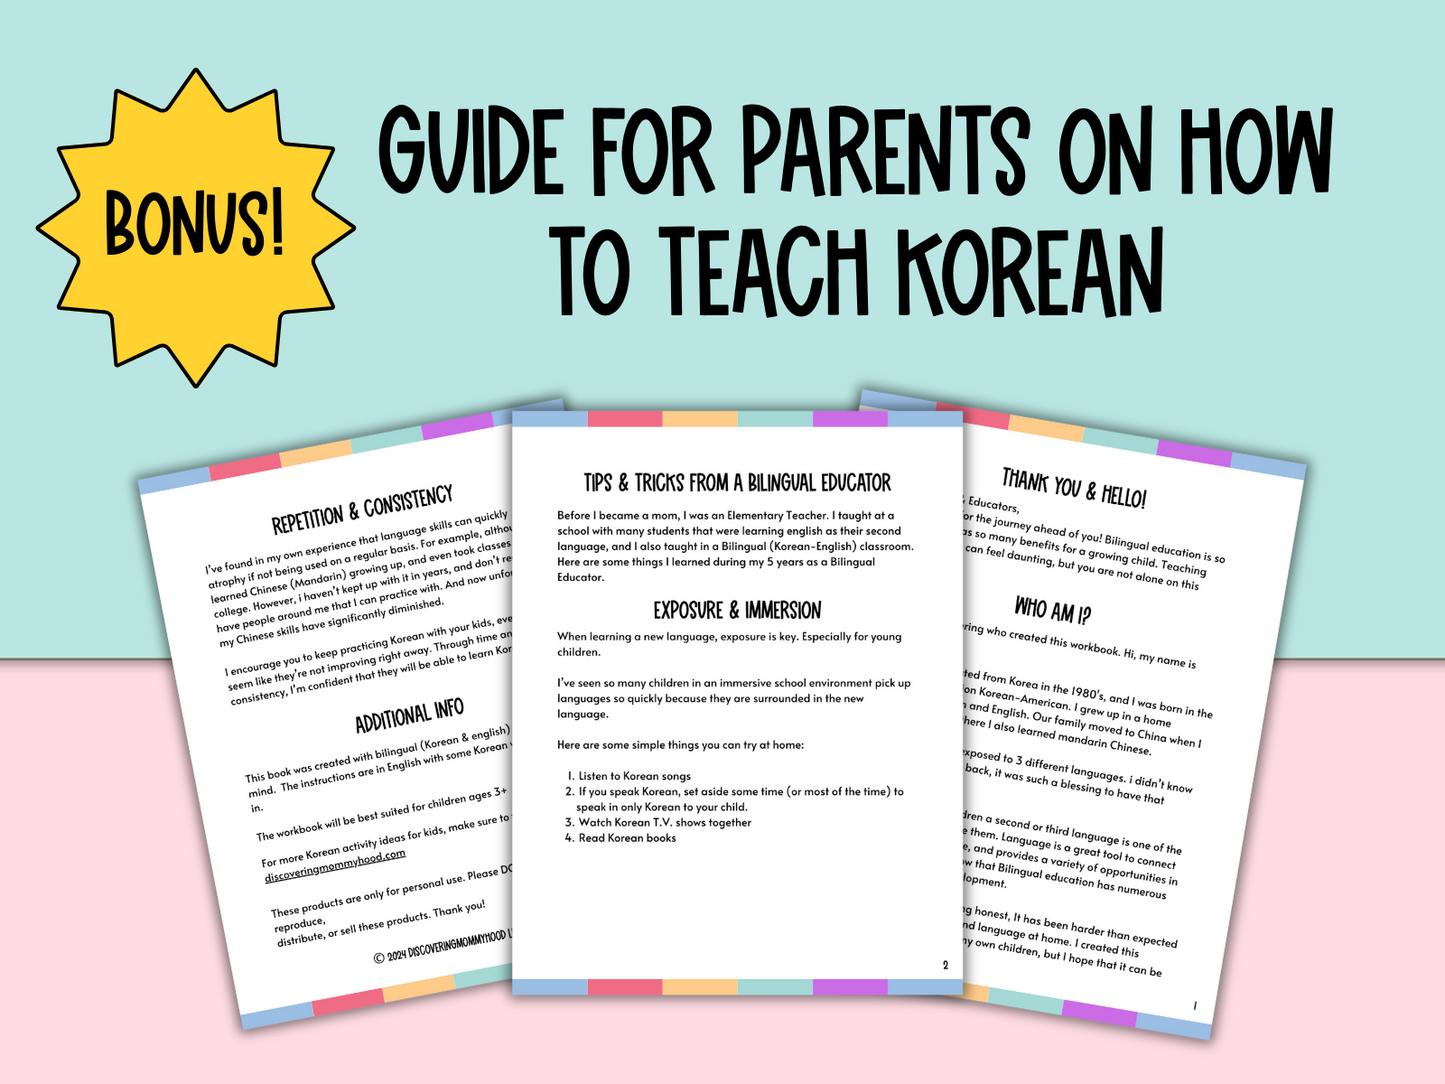 Discovering Korean For Kids: Beginner Workbook #1